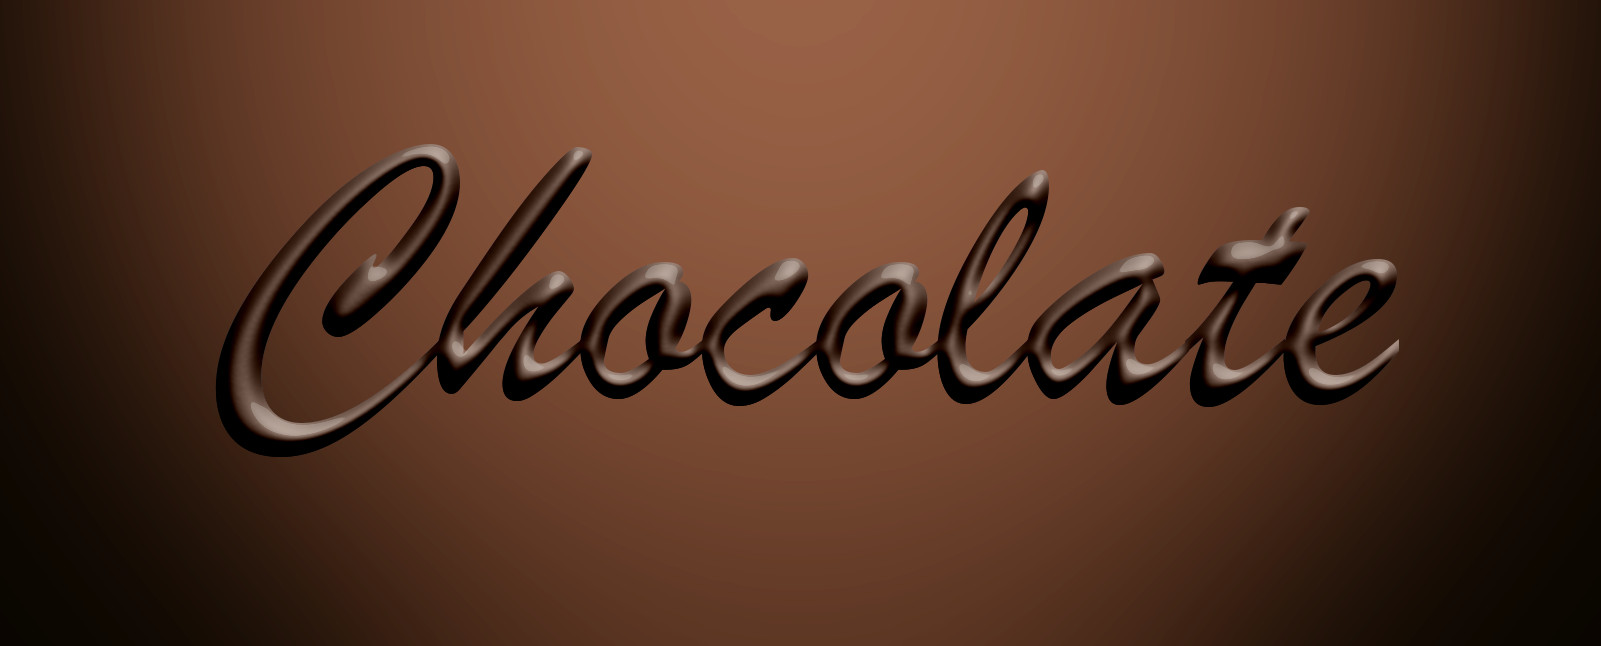 Chocolate_Plastic.JPG